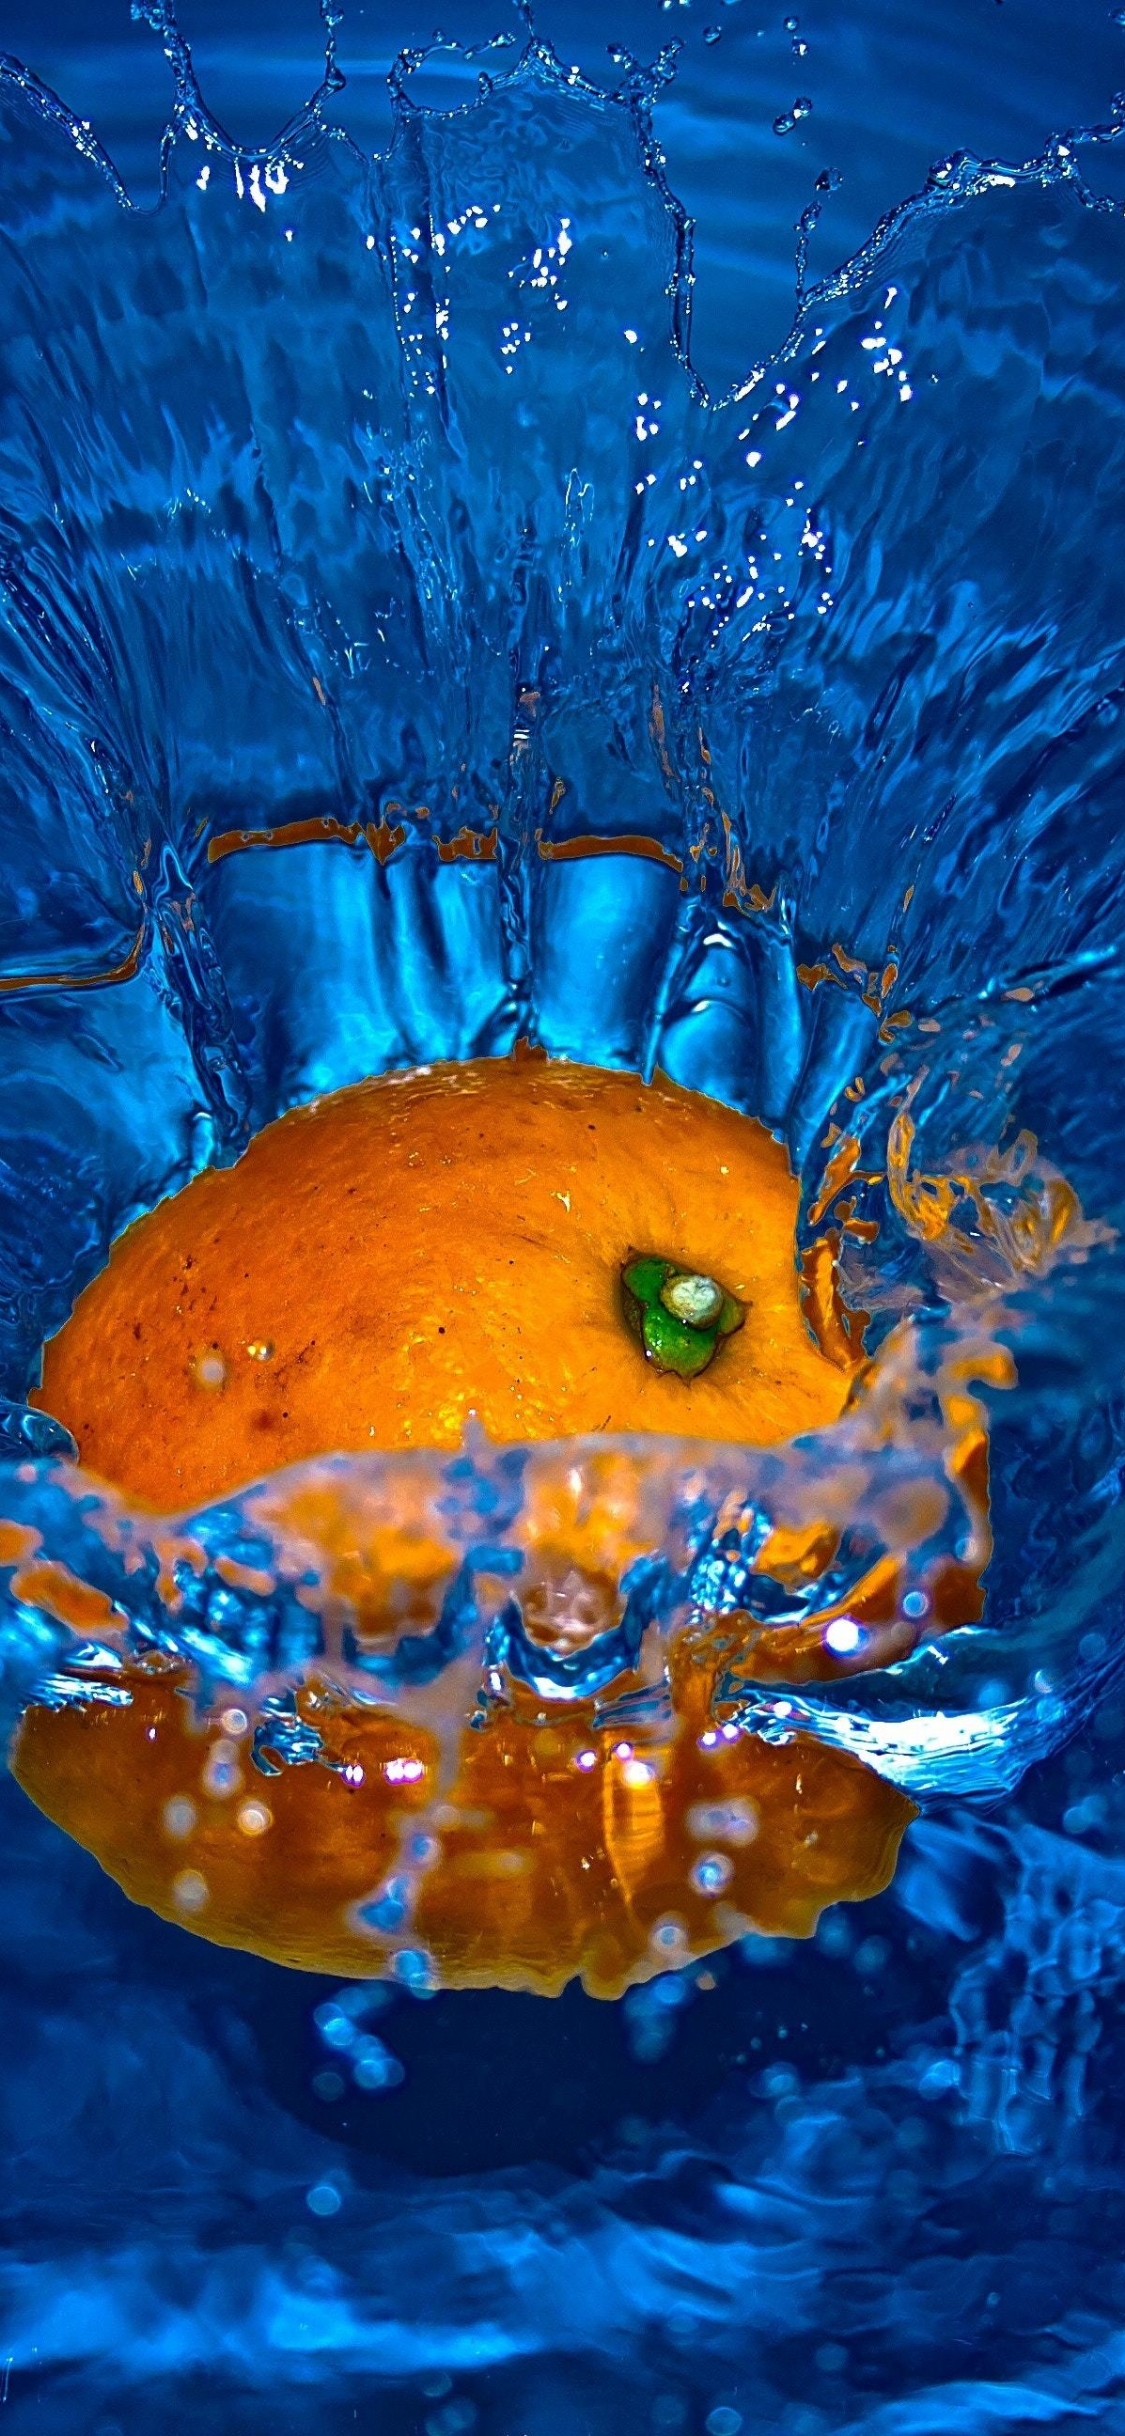 Download wallpaper 1125x2436 orange fruit, splashes, water, iphone x, 1125x2436 HD background, 21678